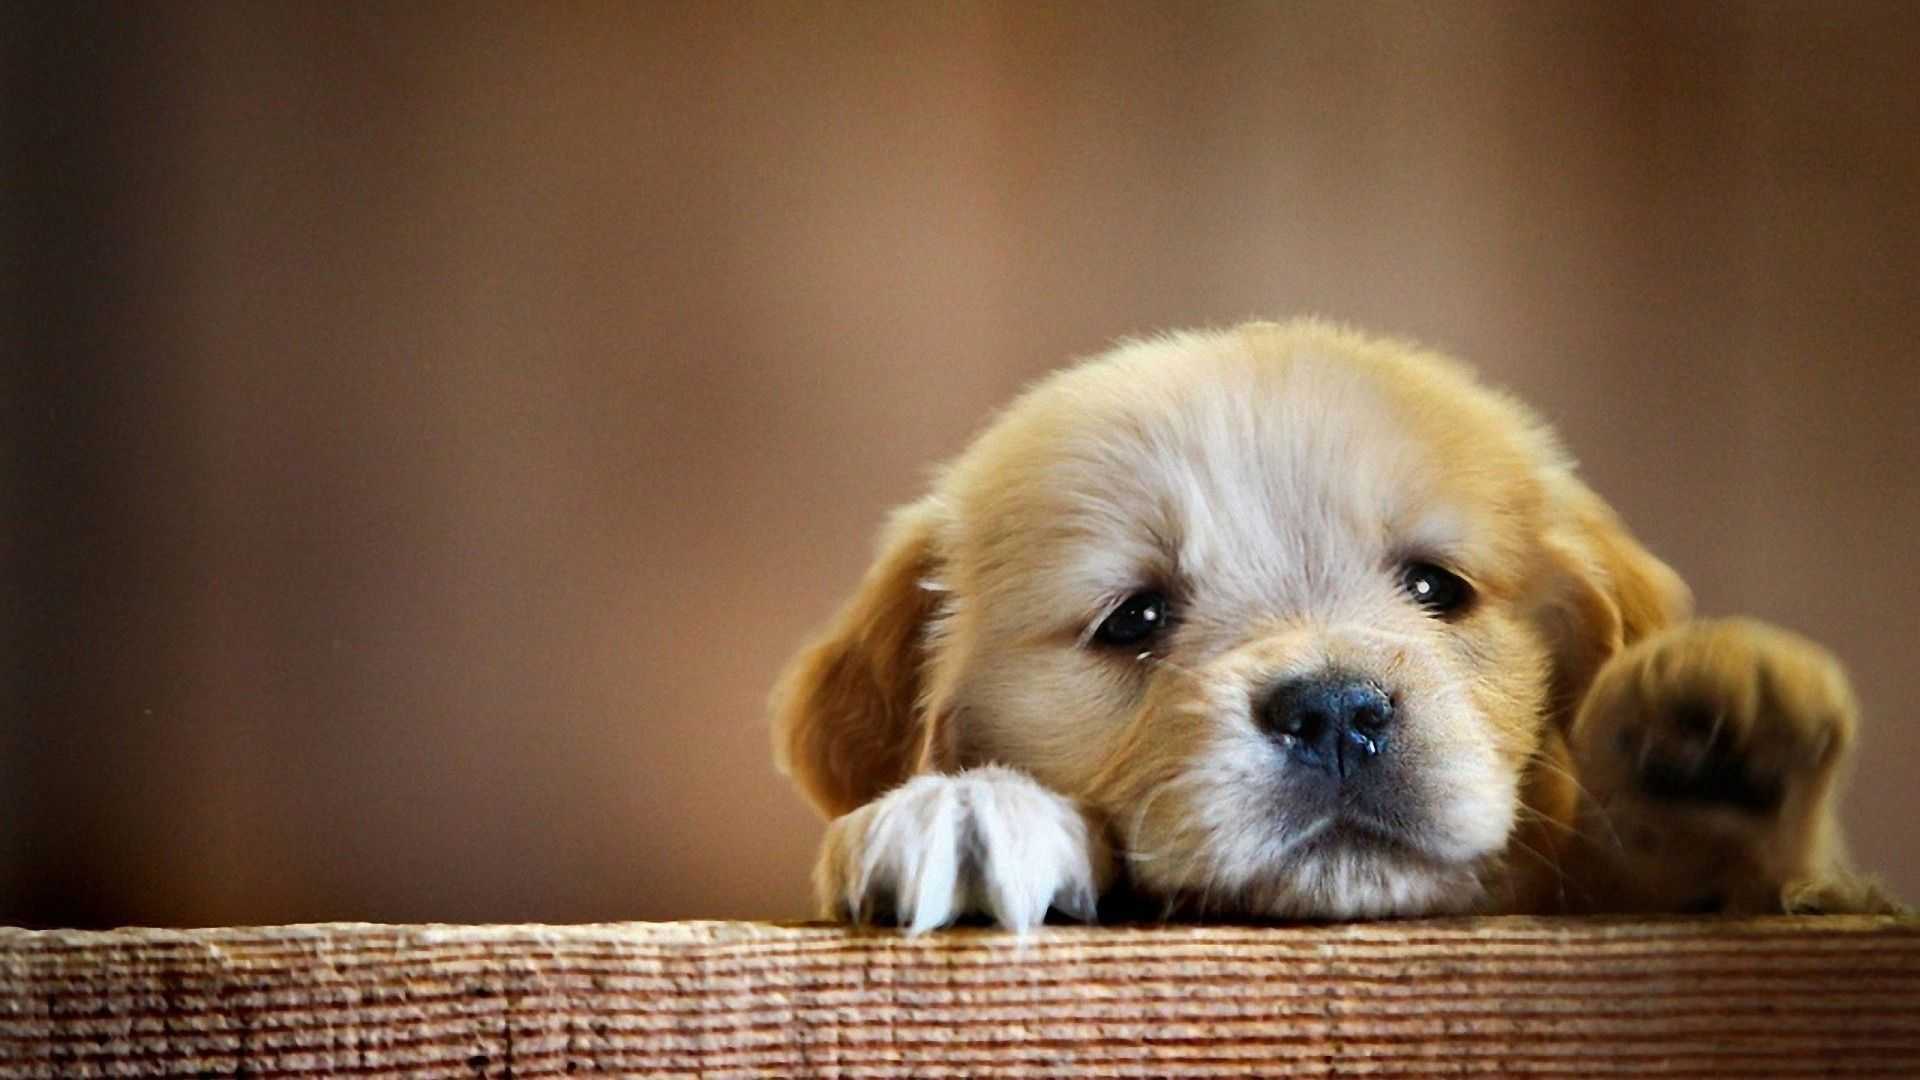 Cute Puppy Wallpaper - NawPic